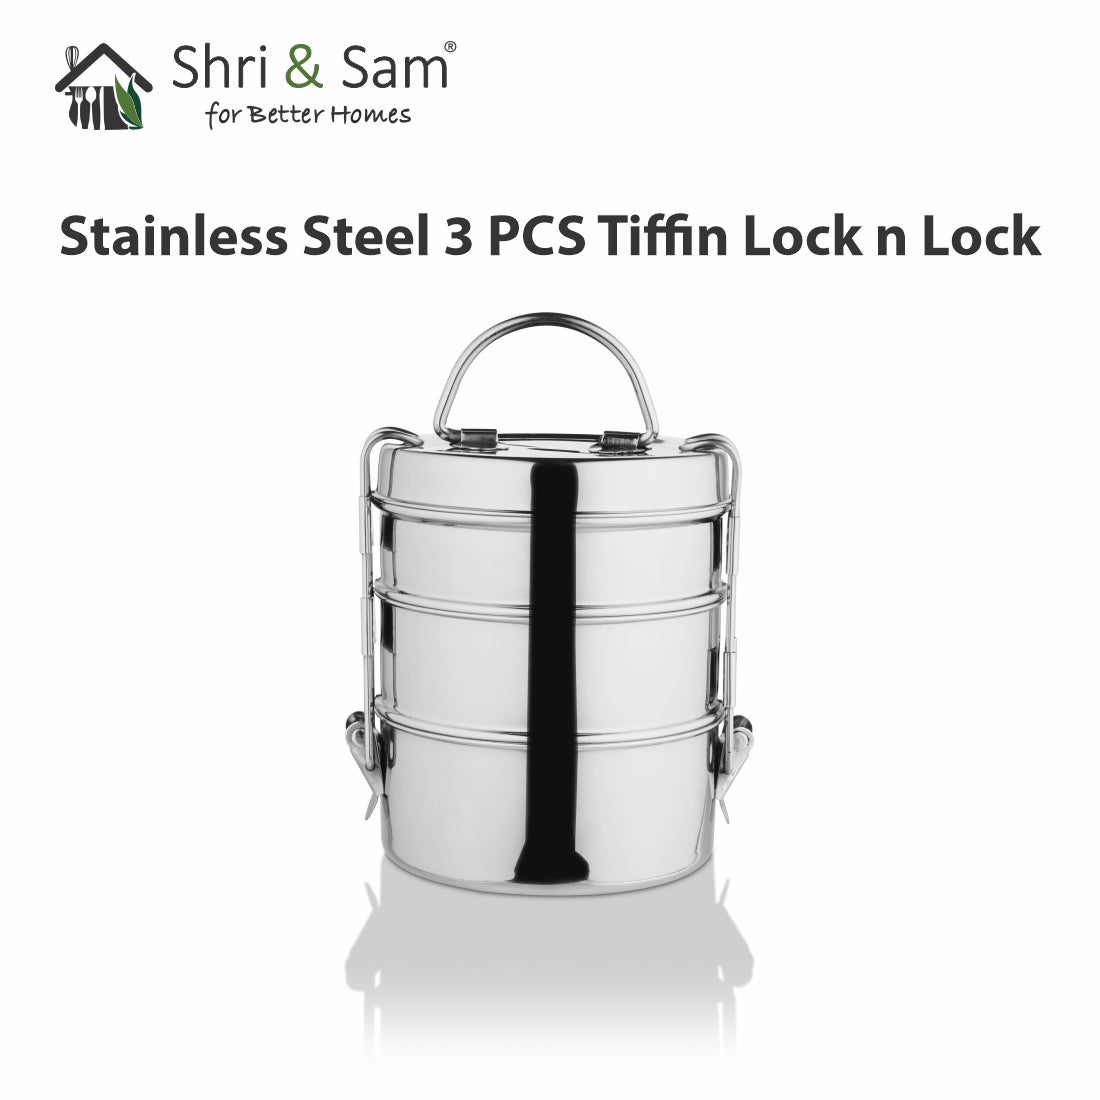 Stainless Steel 3 PCS Tiffin Lock n Lock